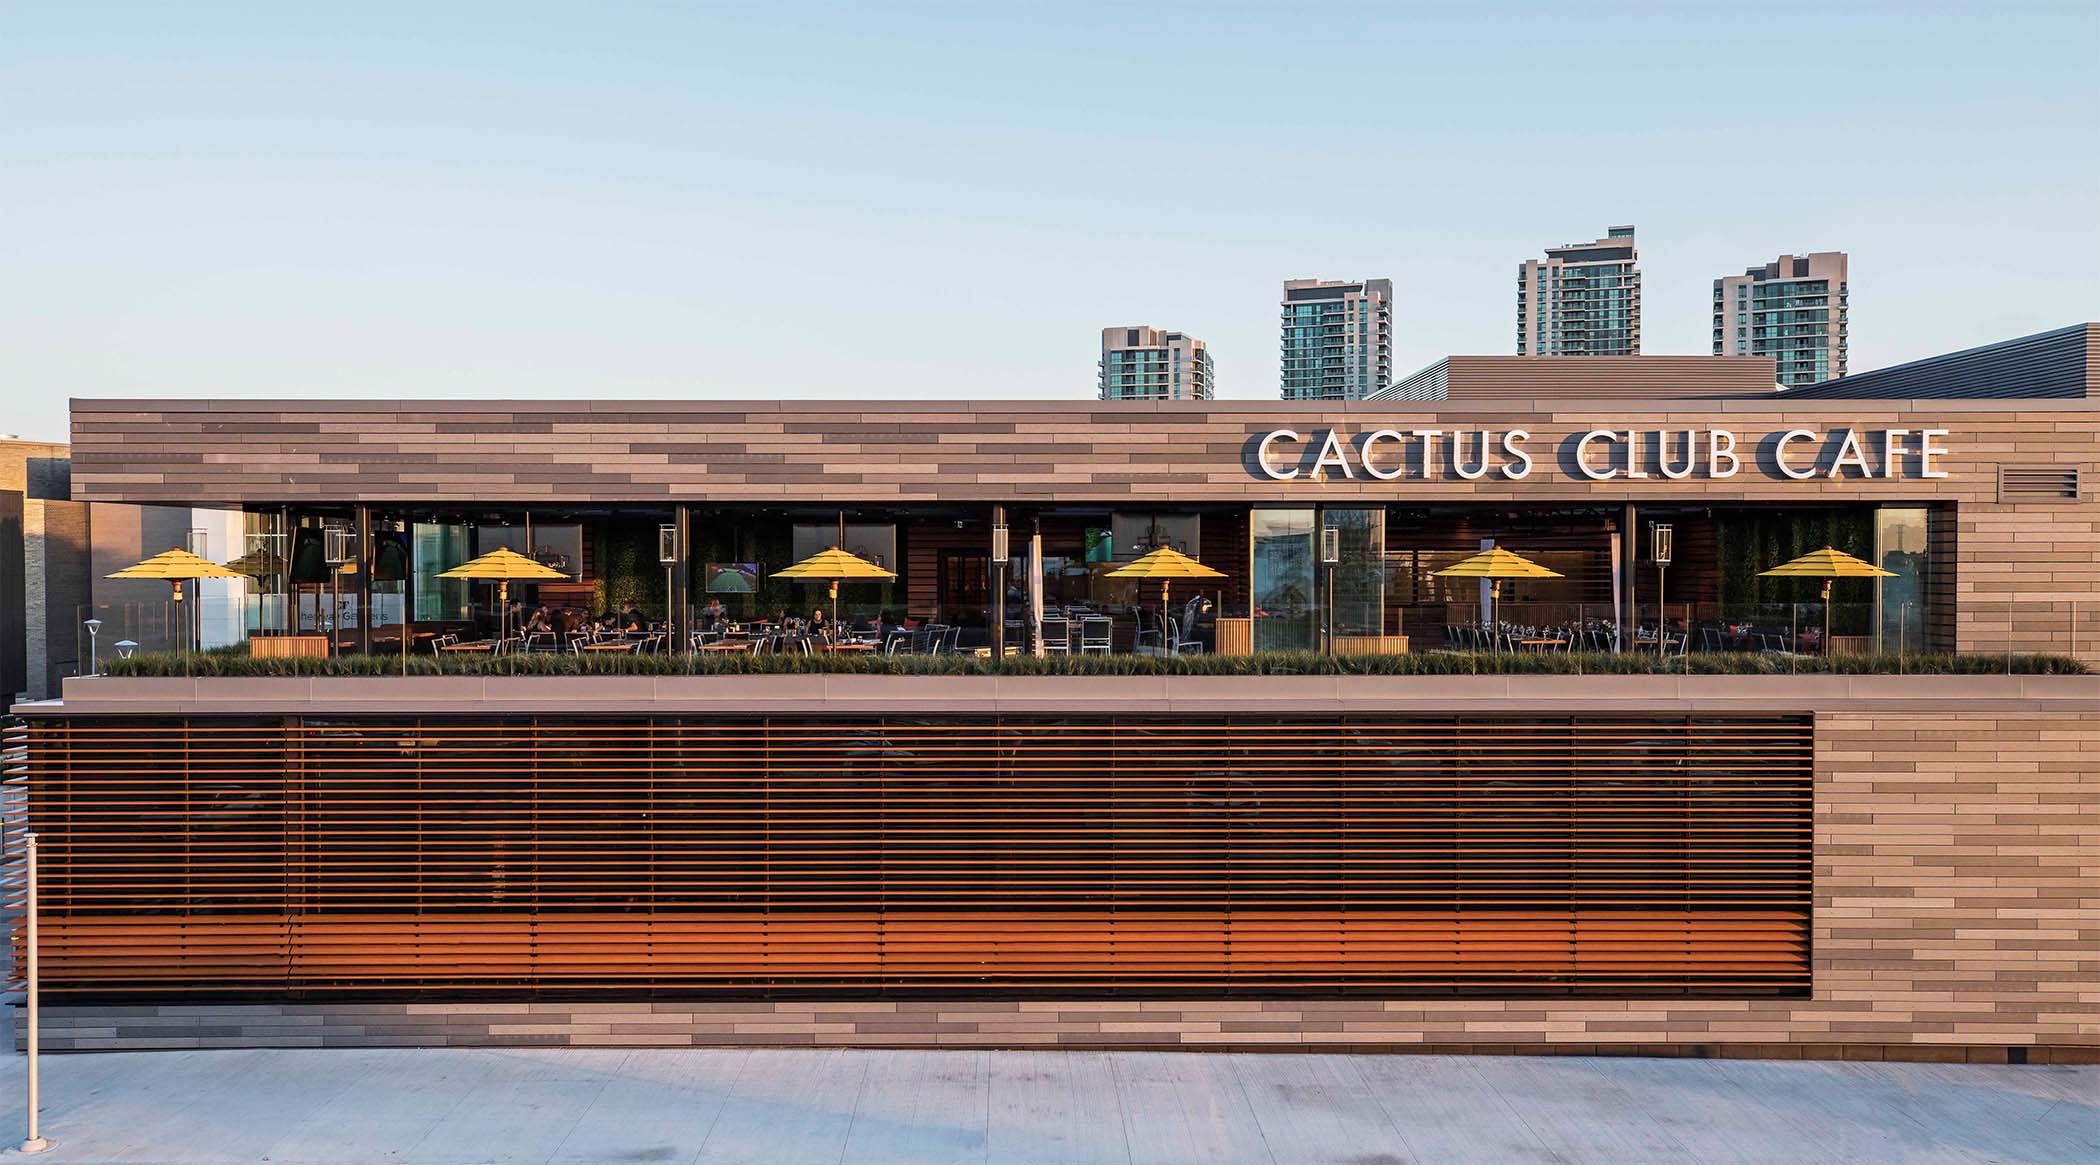 https://www.assembledge.com/wp-content/uploads/2019/04/Cactus-Club-Cafe_Station-Square_exterior.jpg